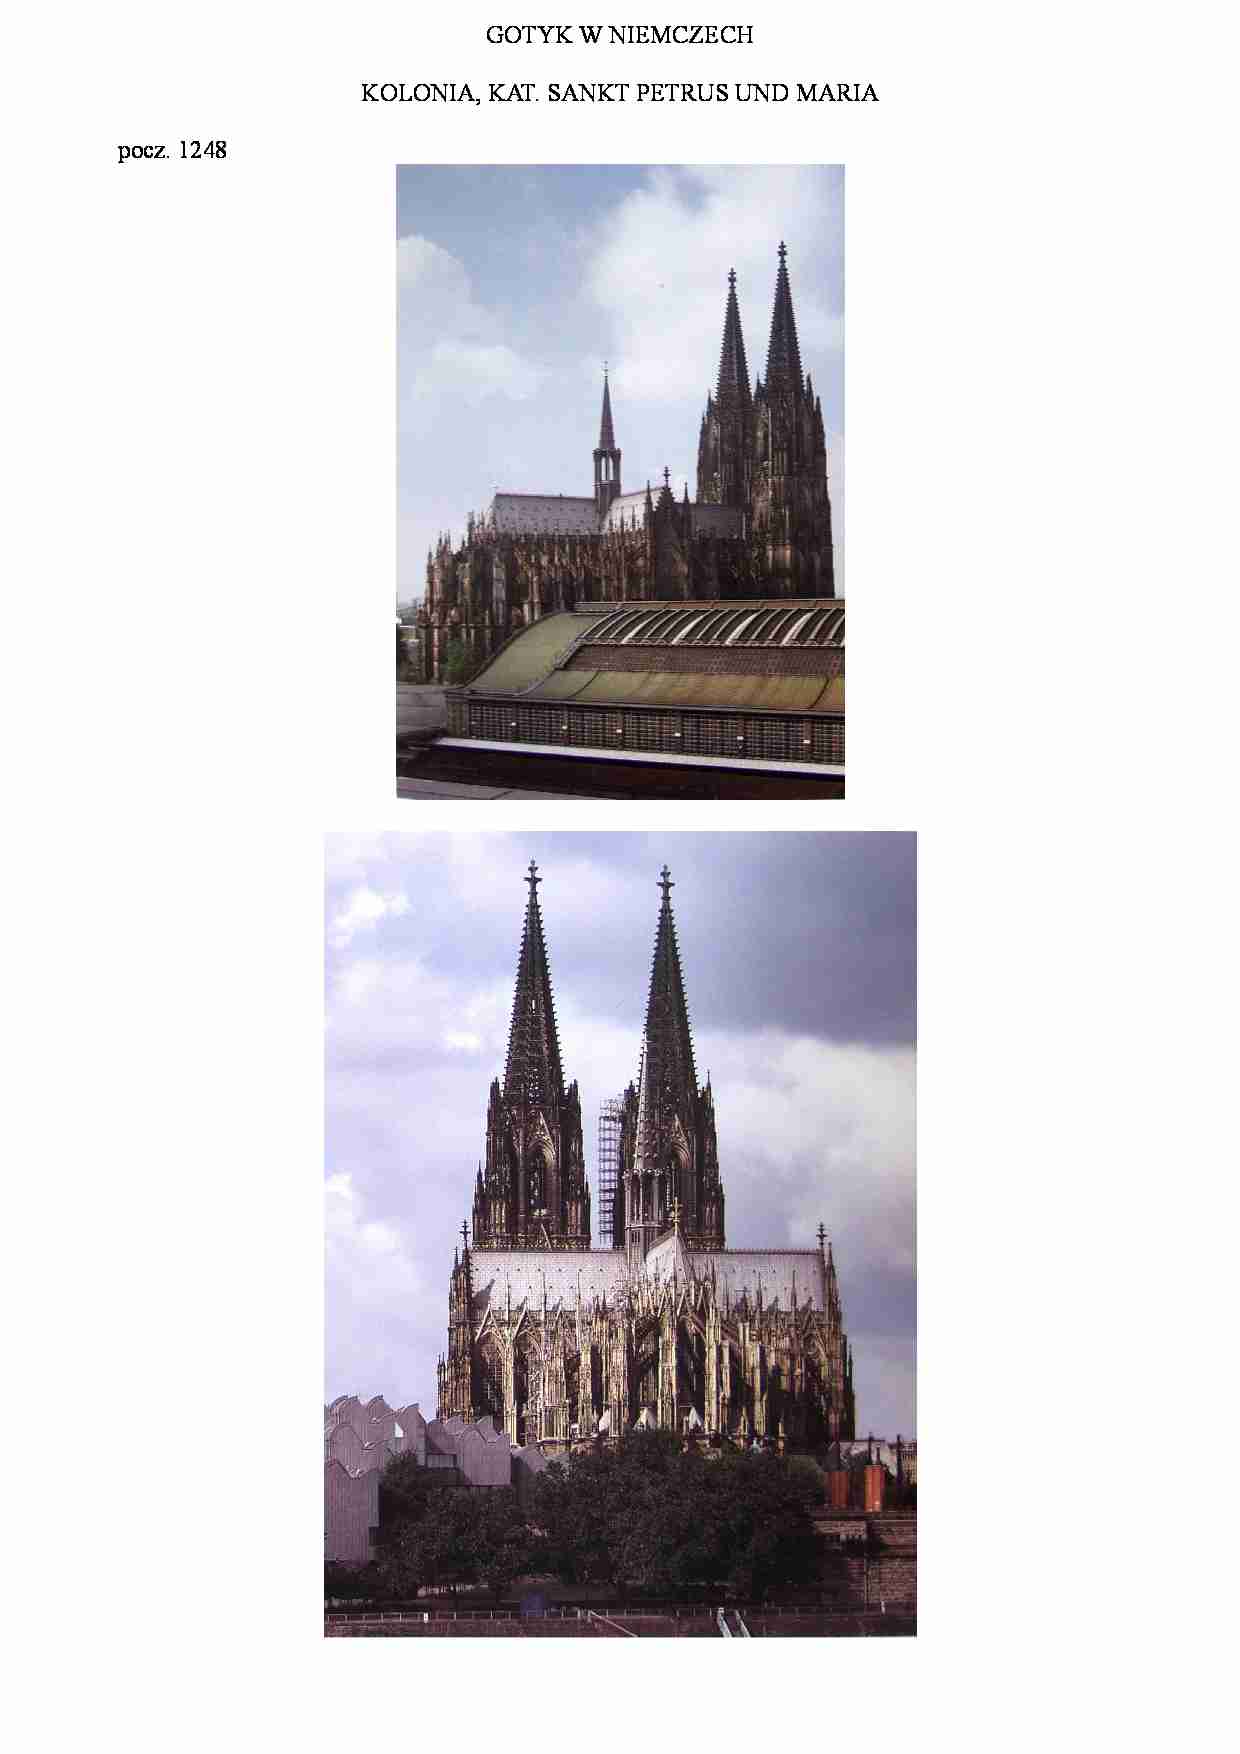 Gotyk w Niemczech-Sankt Petrus und Maria - strona 1